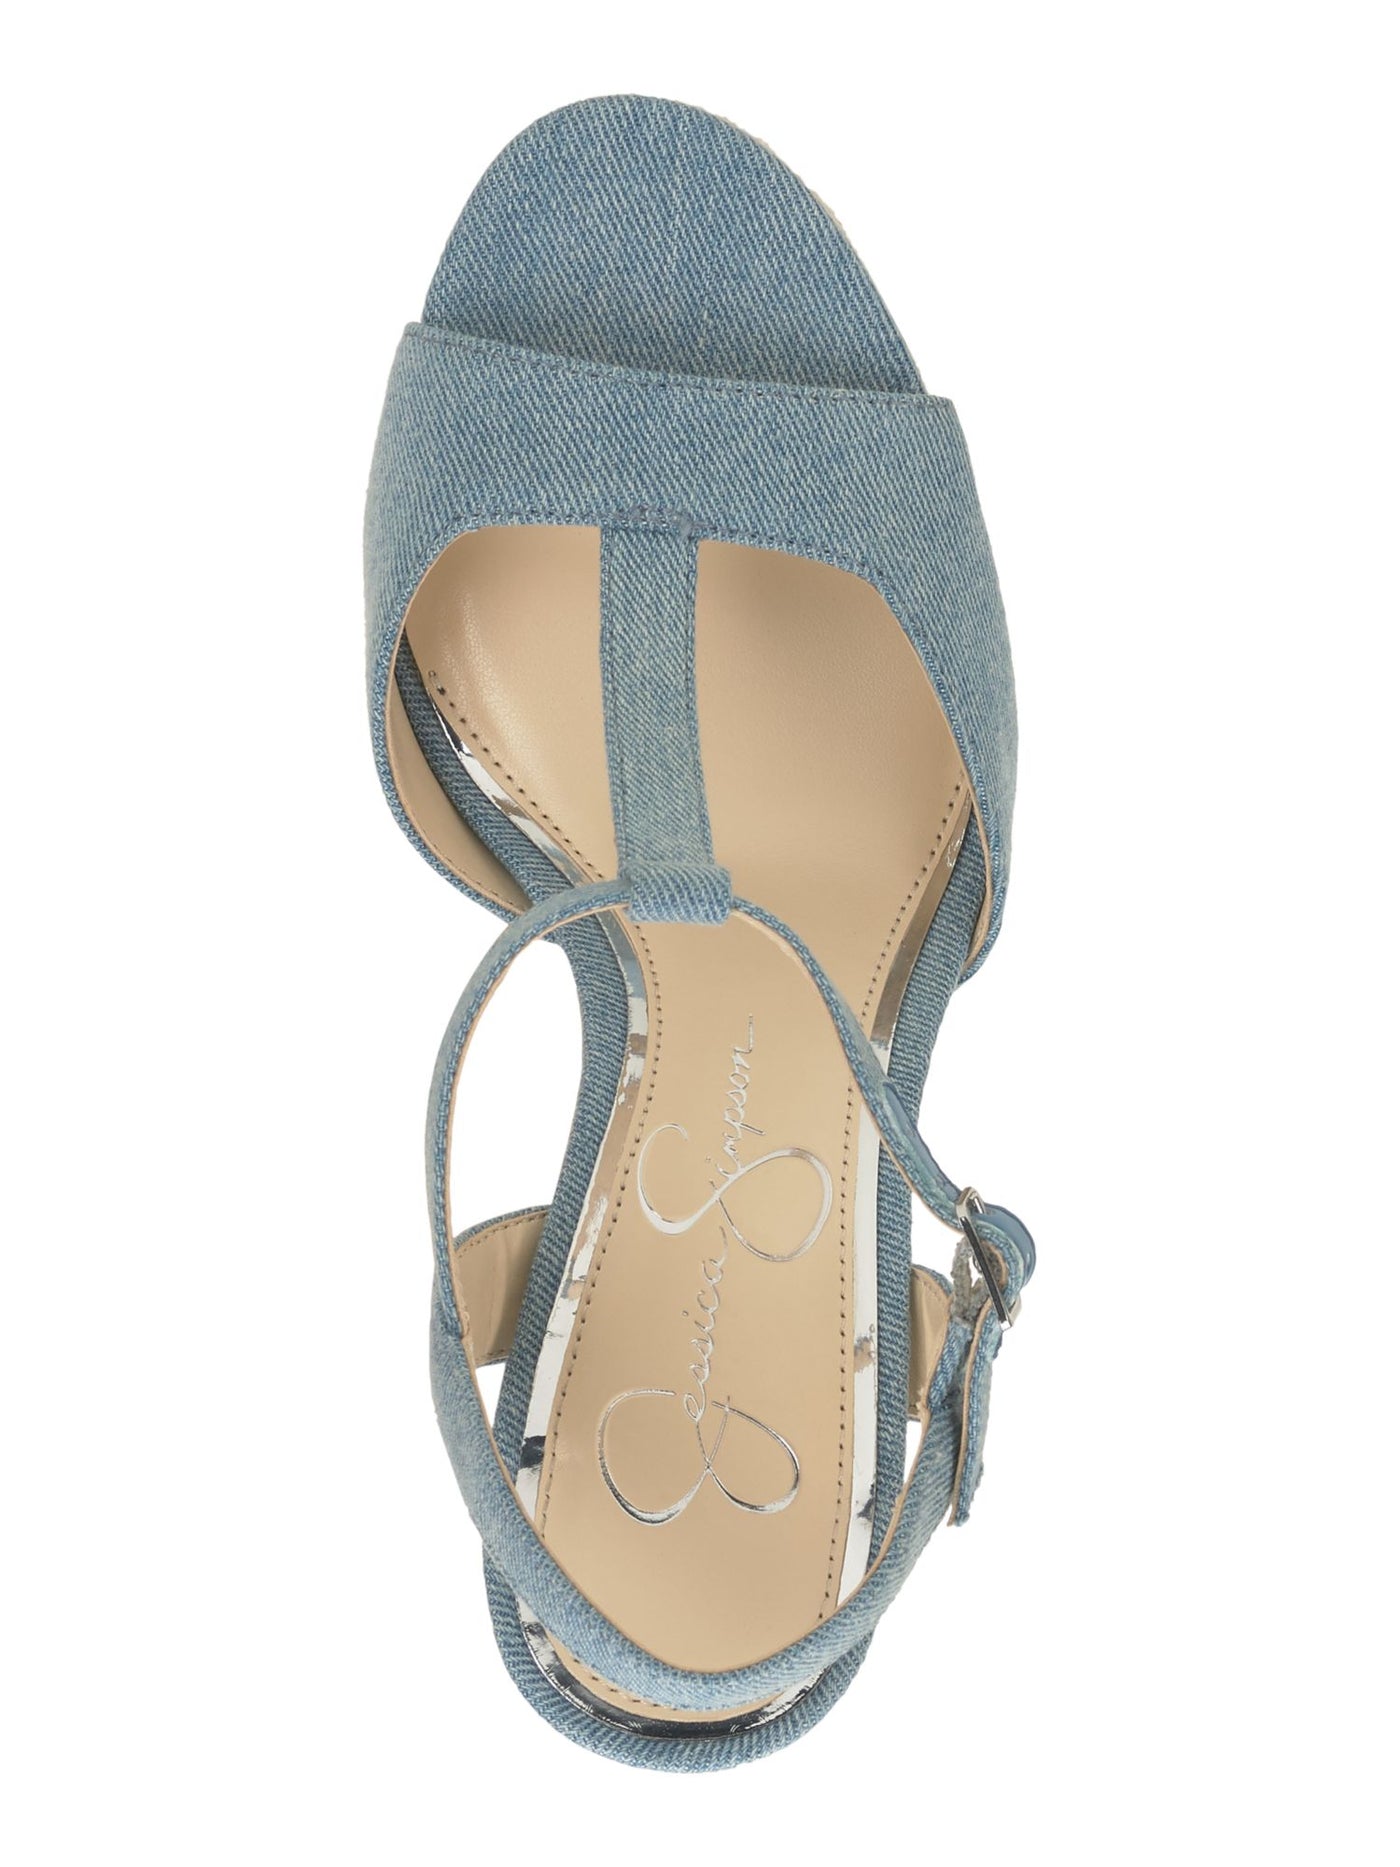 JESSICA SIMPSON Womens Blue 1-1/2" Platform T-Strap Padded Ameeka Round Toe Platform Buckle Espadrille Shoes 9.5 M